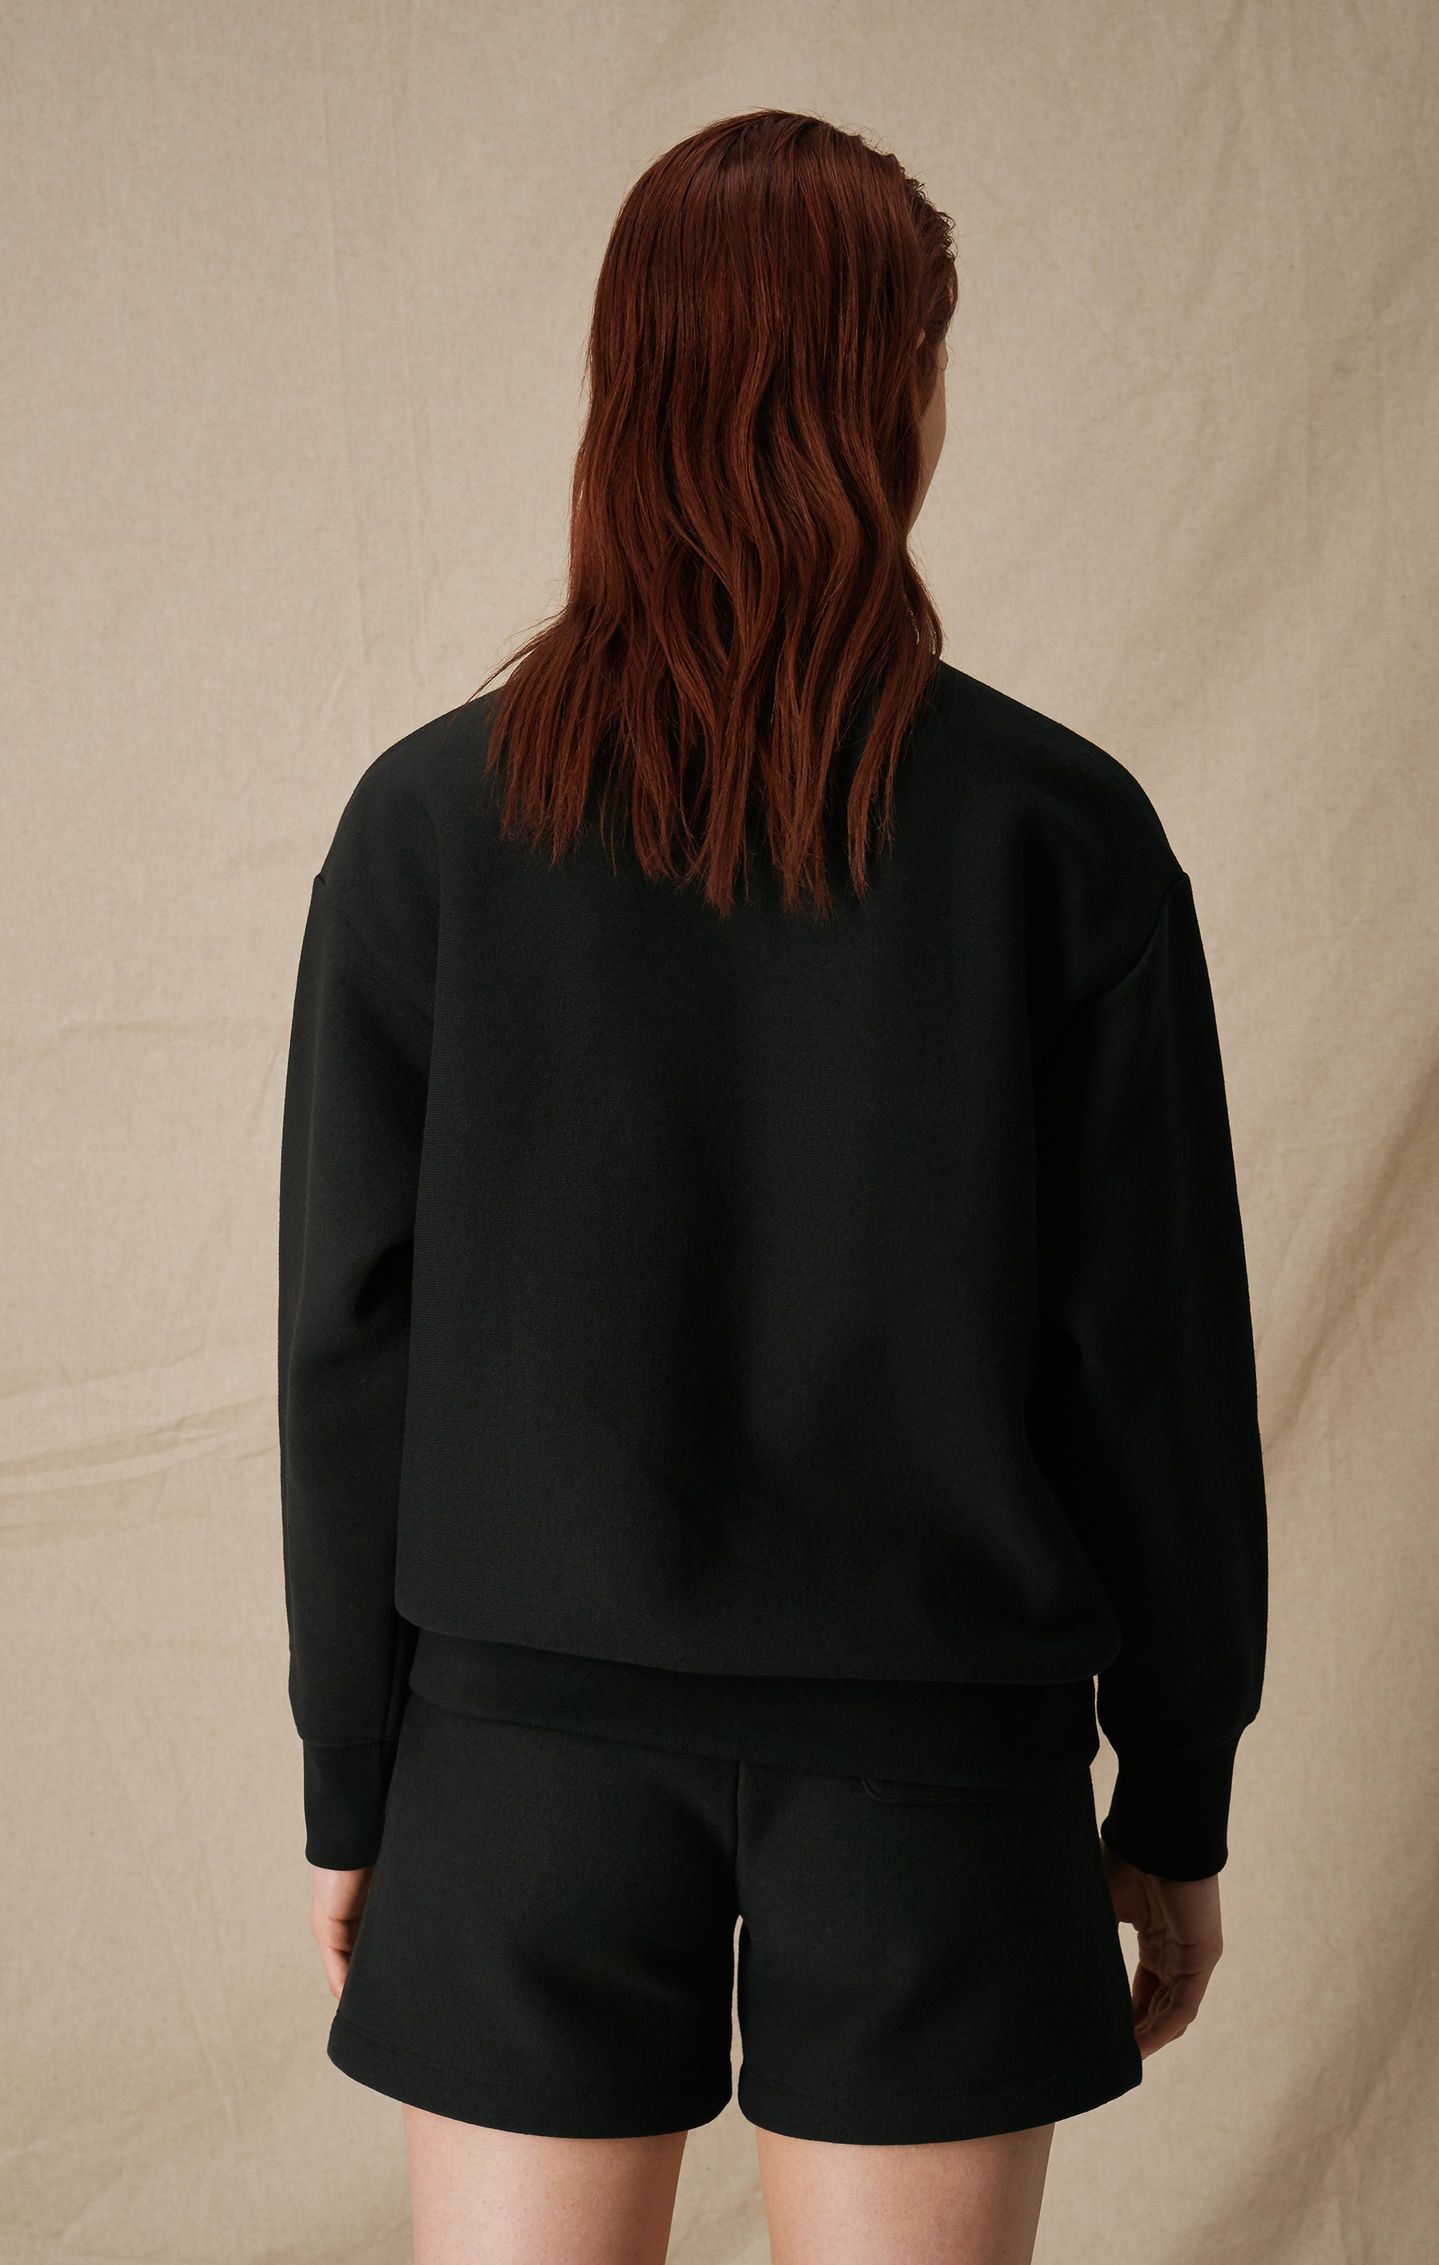 Crewneck Sweatshirt - Black